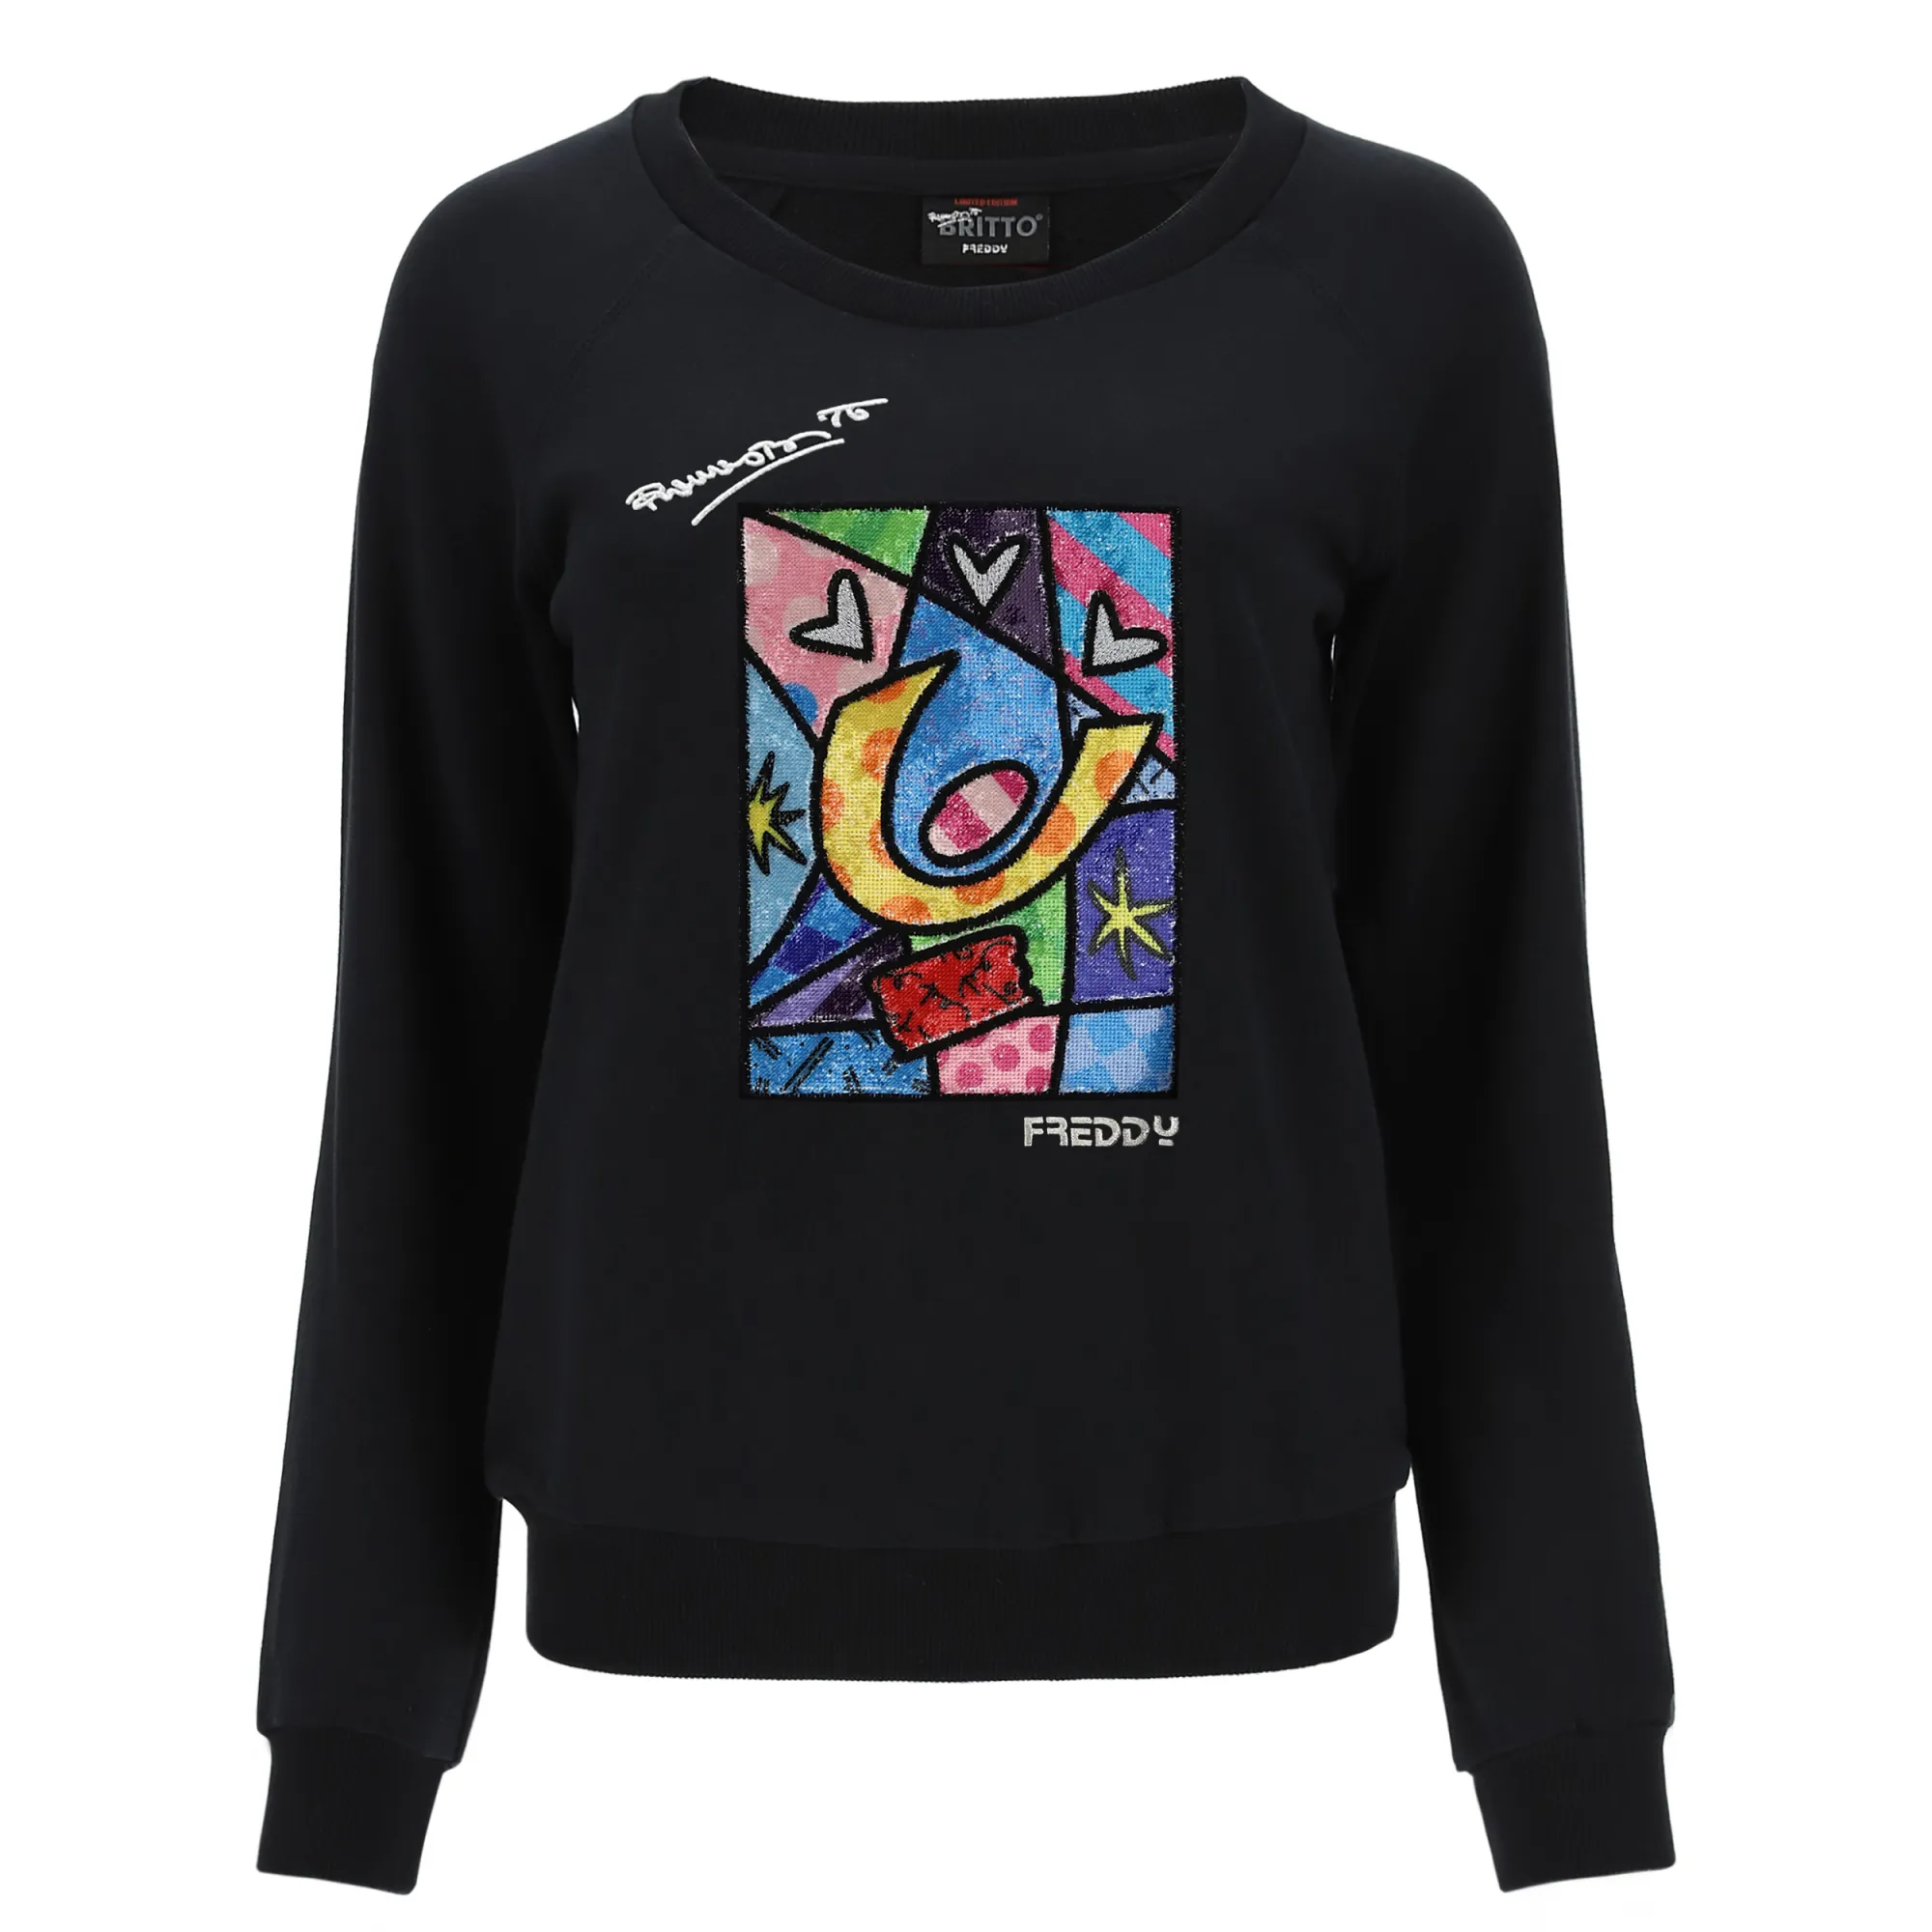 Freddy Patch Crew Neck Sweatshirt - Romero Britto Collection